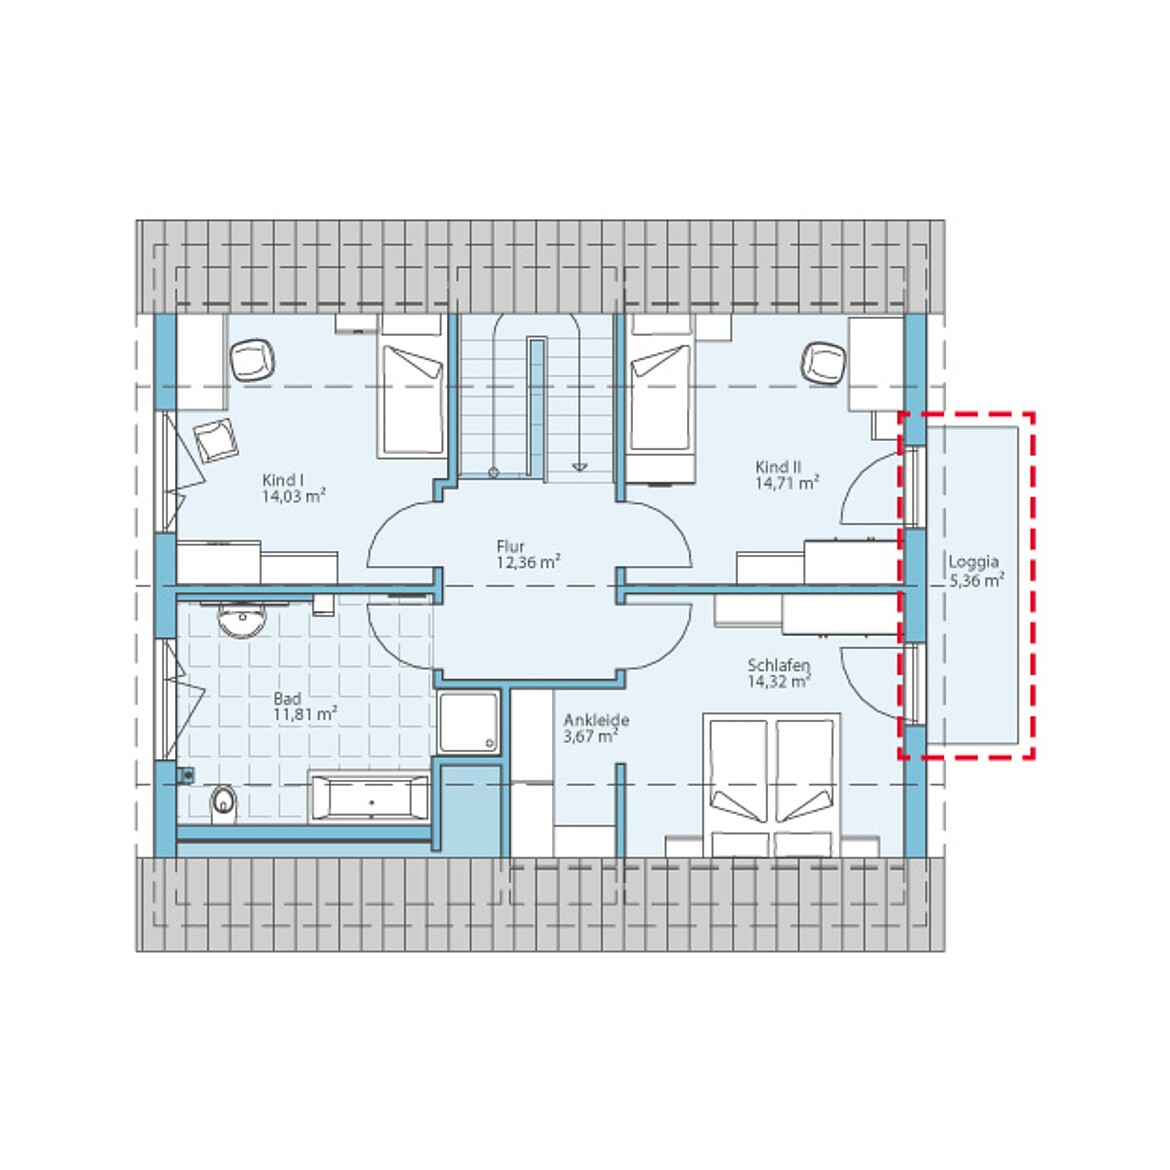 Prefabricated house Variant 45-154: Top floor plan option